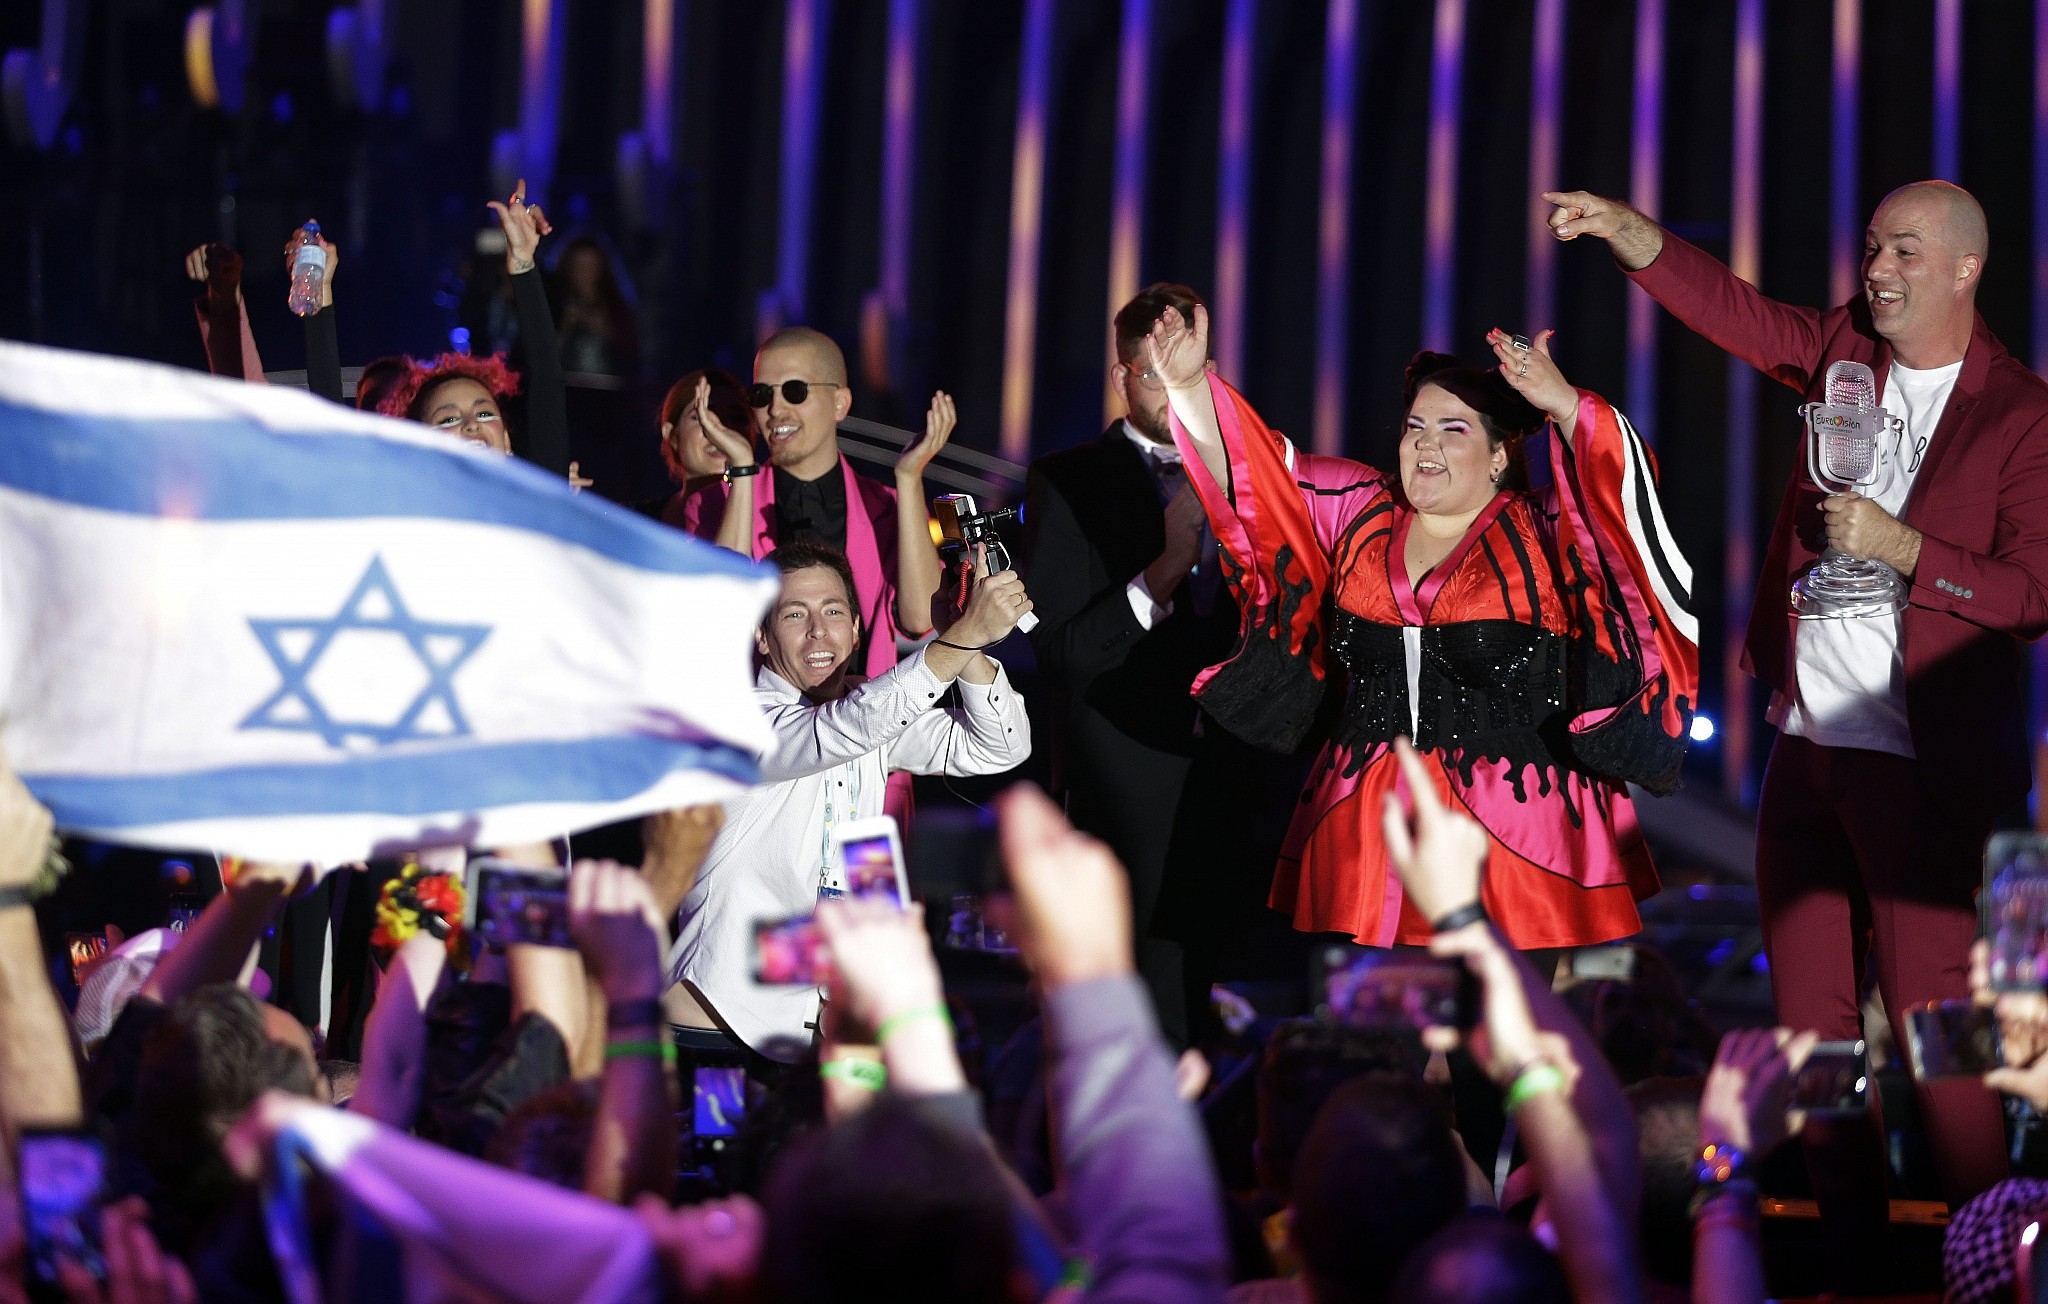 Eurovision 2019: Η EBU ζητά υποψηφιότητες από πόλεις που δεν θα διχάσουν – Εκτός η Ιερουσαλήμ;